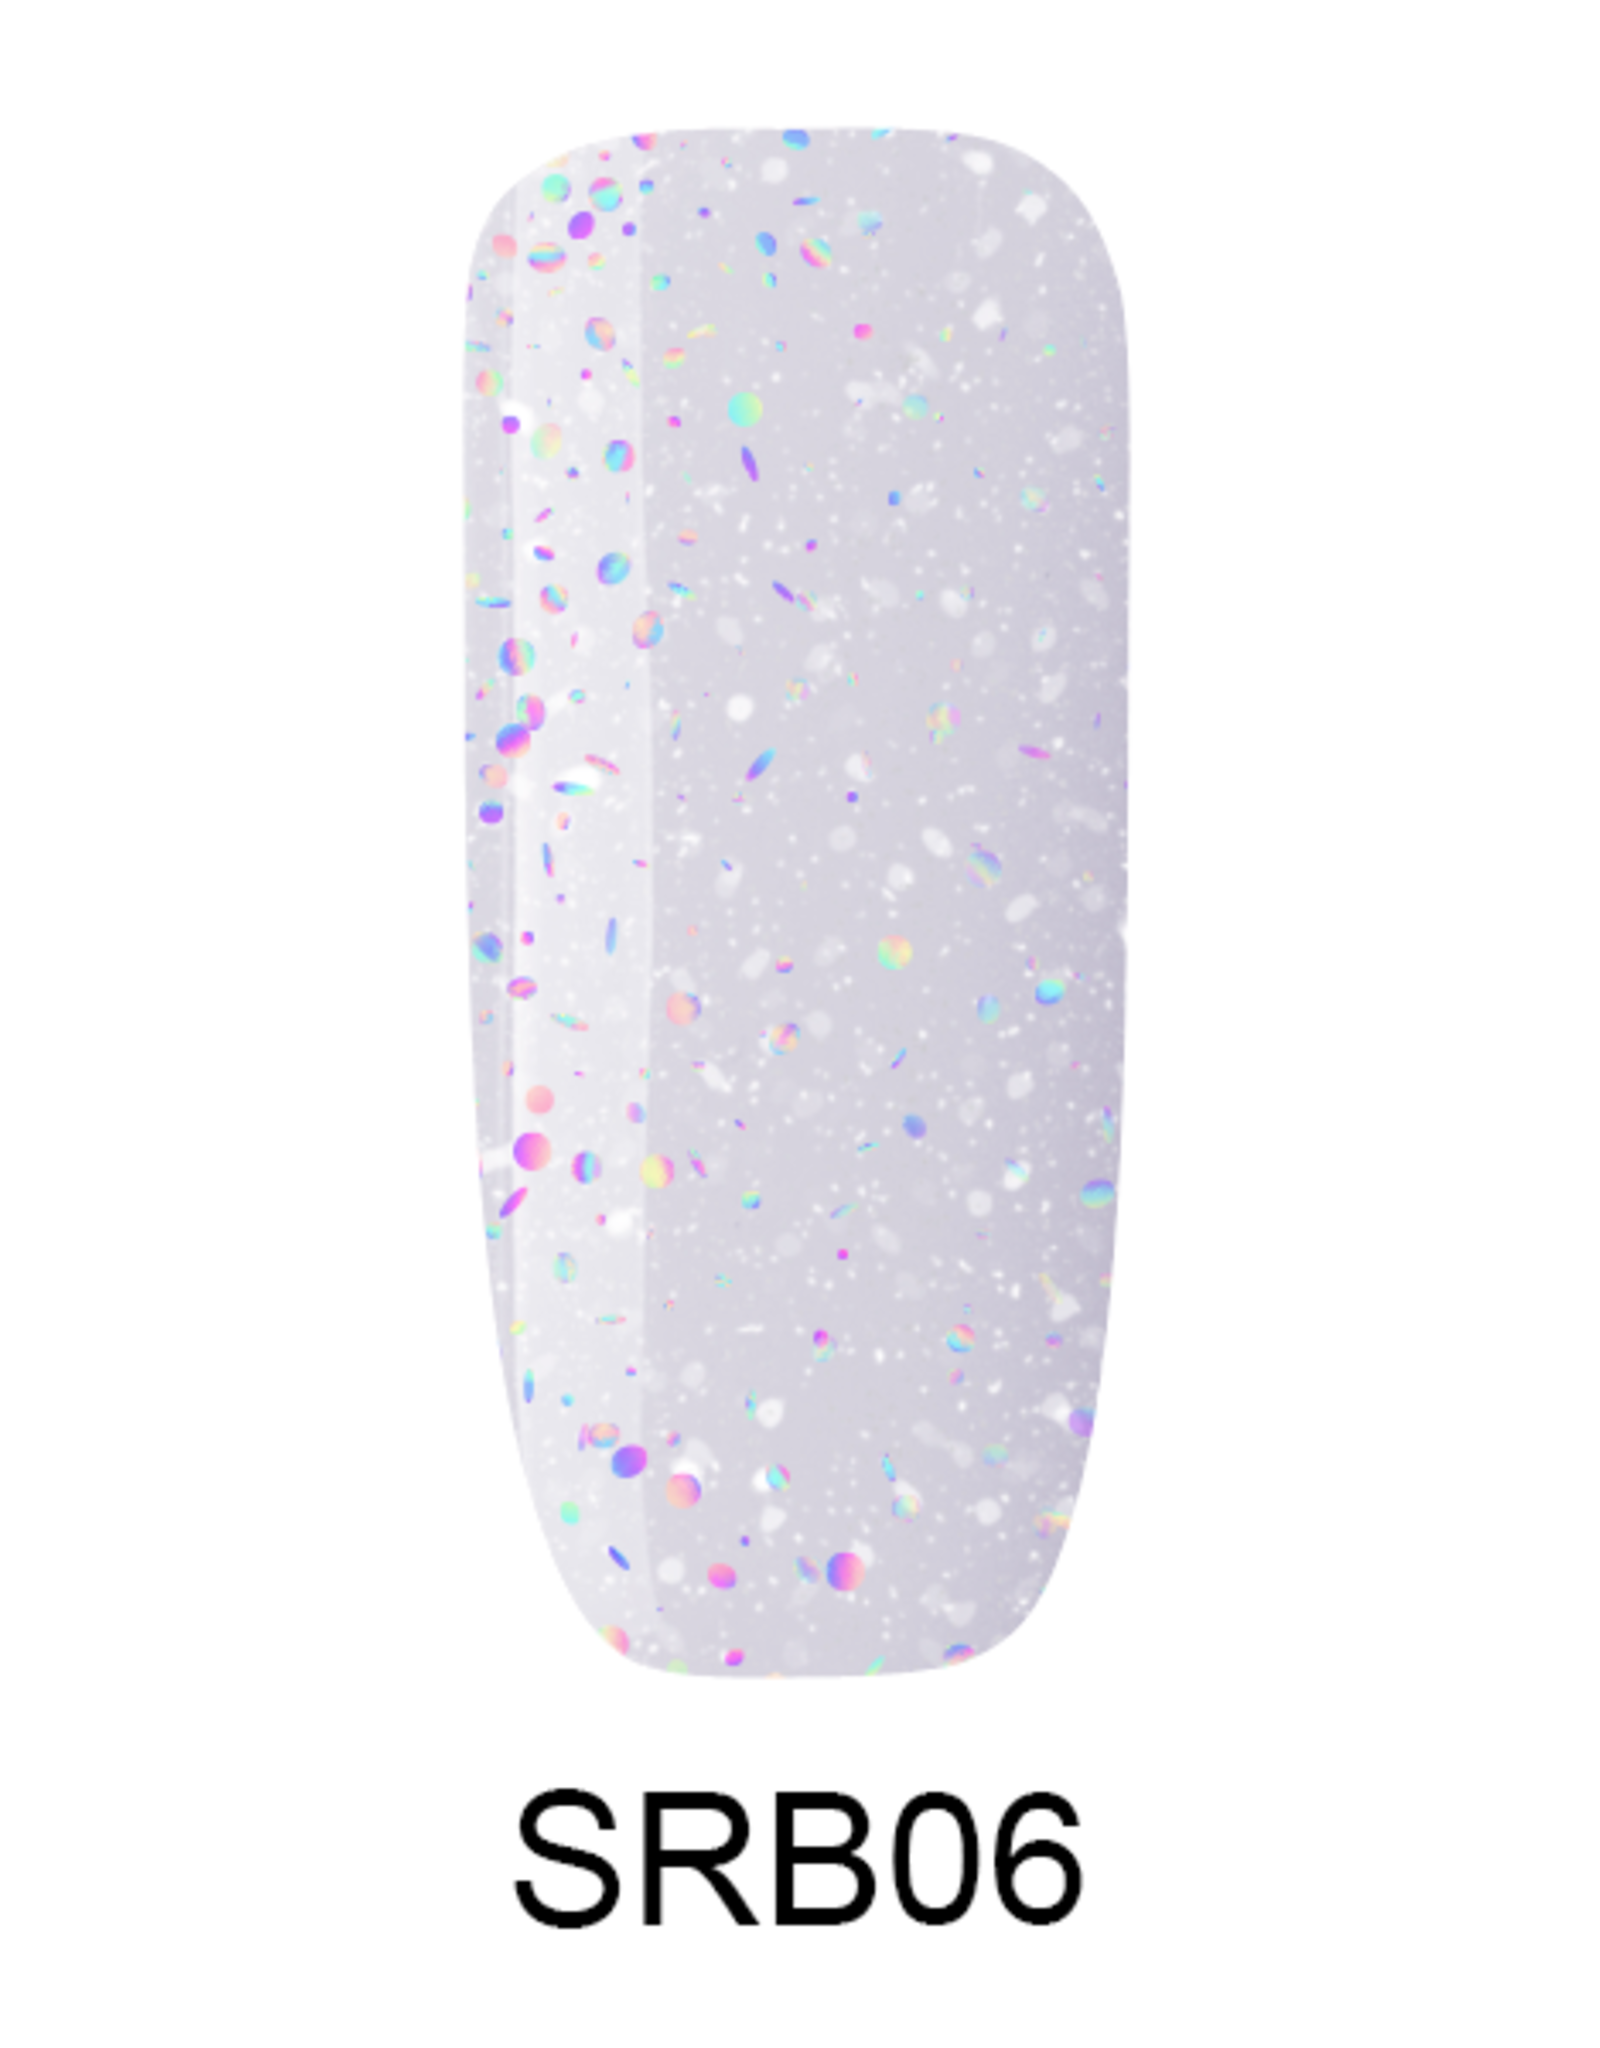 Serpens - Sparkling Rubber Base